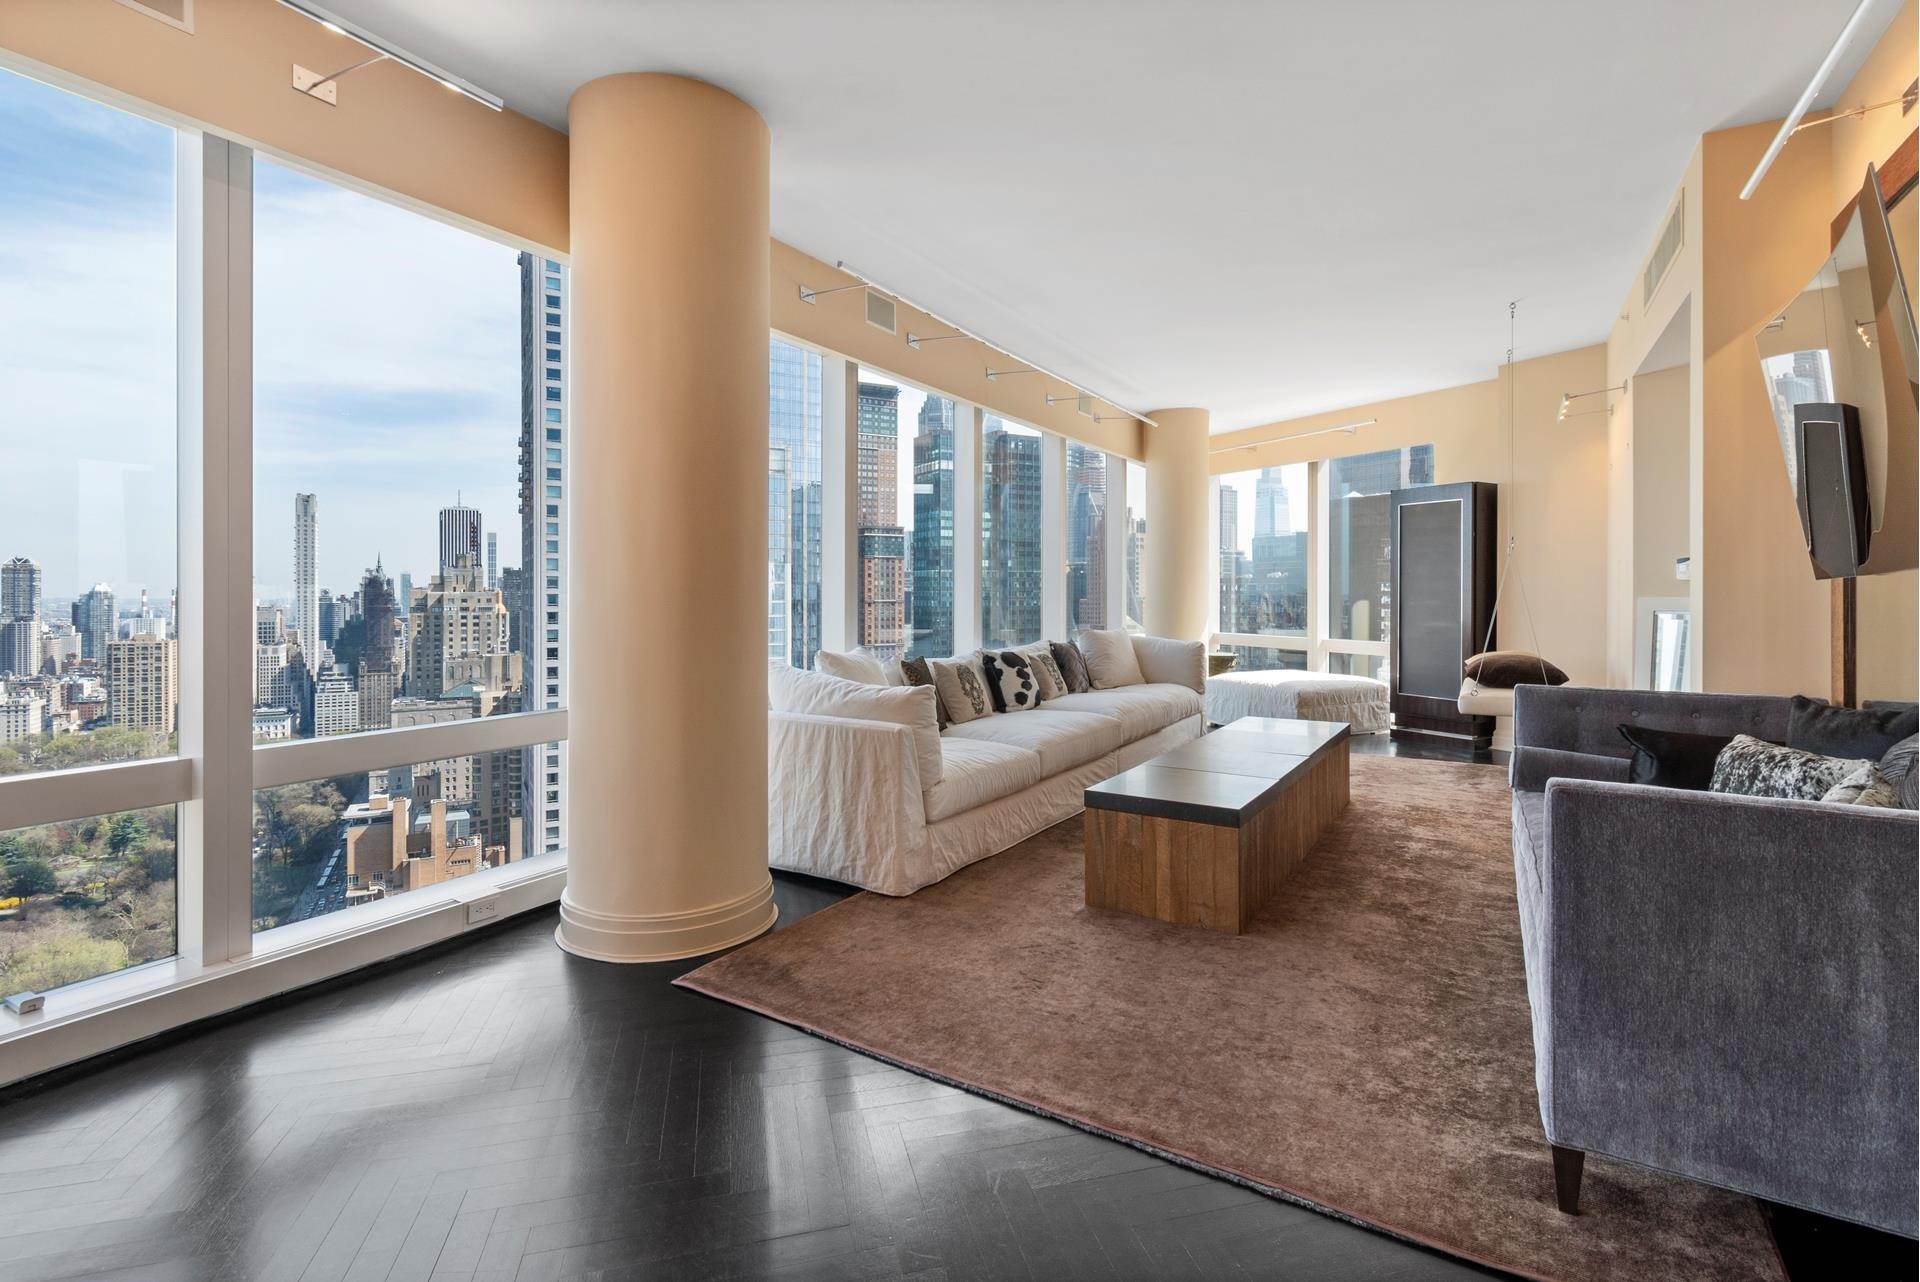 Condominium for Sale at Lincoln Square, Manhattan, NY 10019